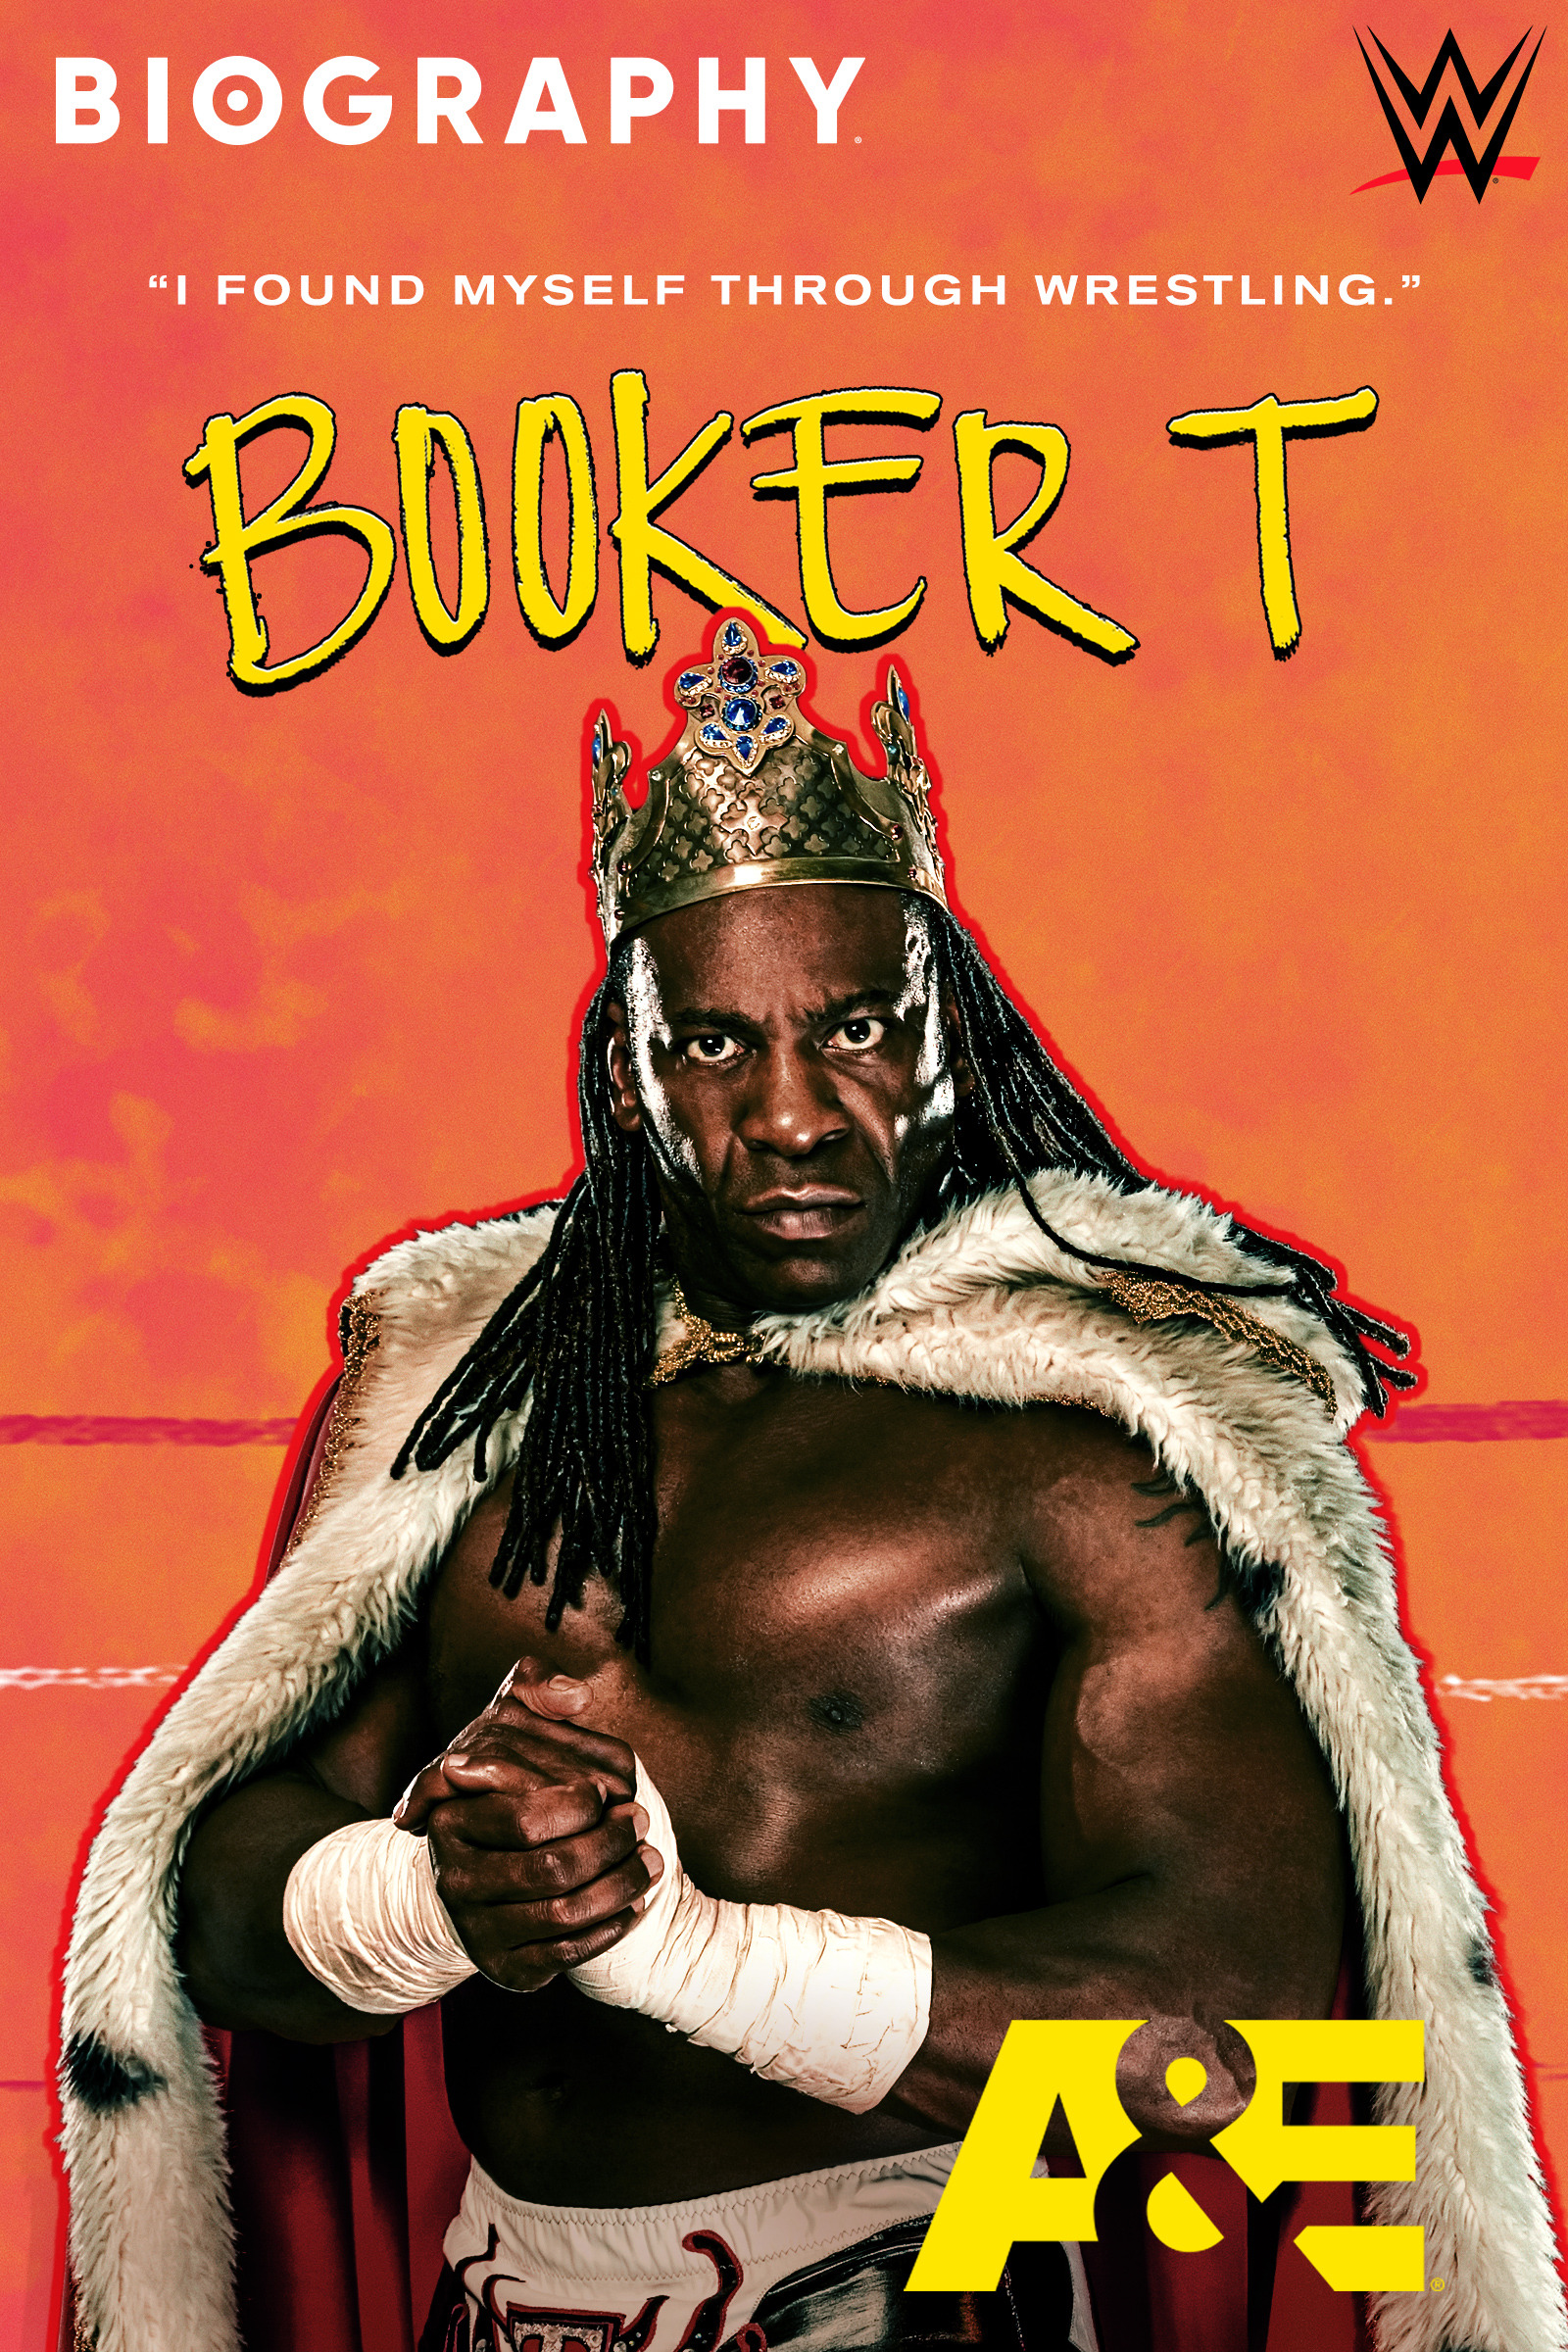 Mega Sized TV Poster Image for Biography: WWE Legends (#2 of 11)